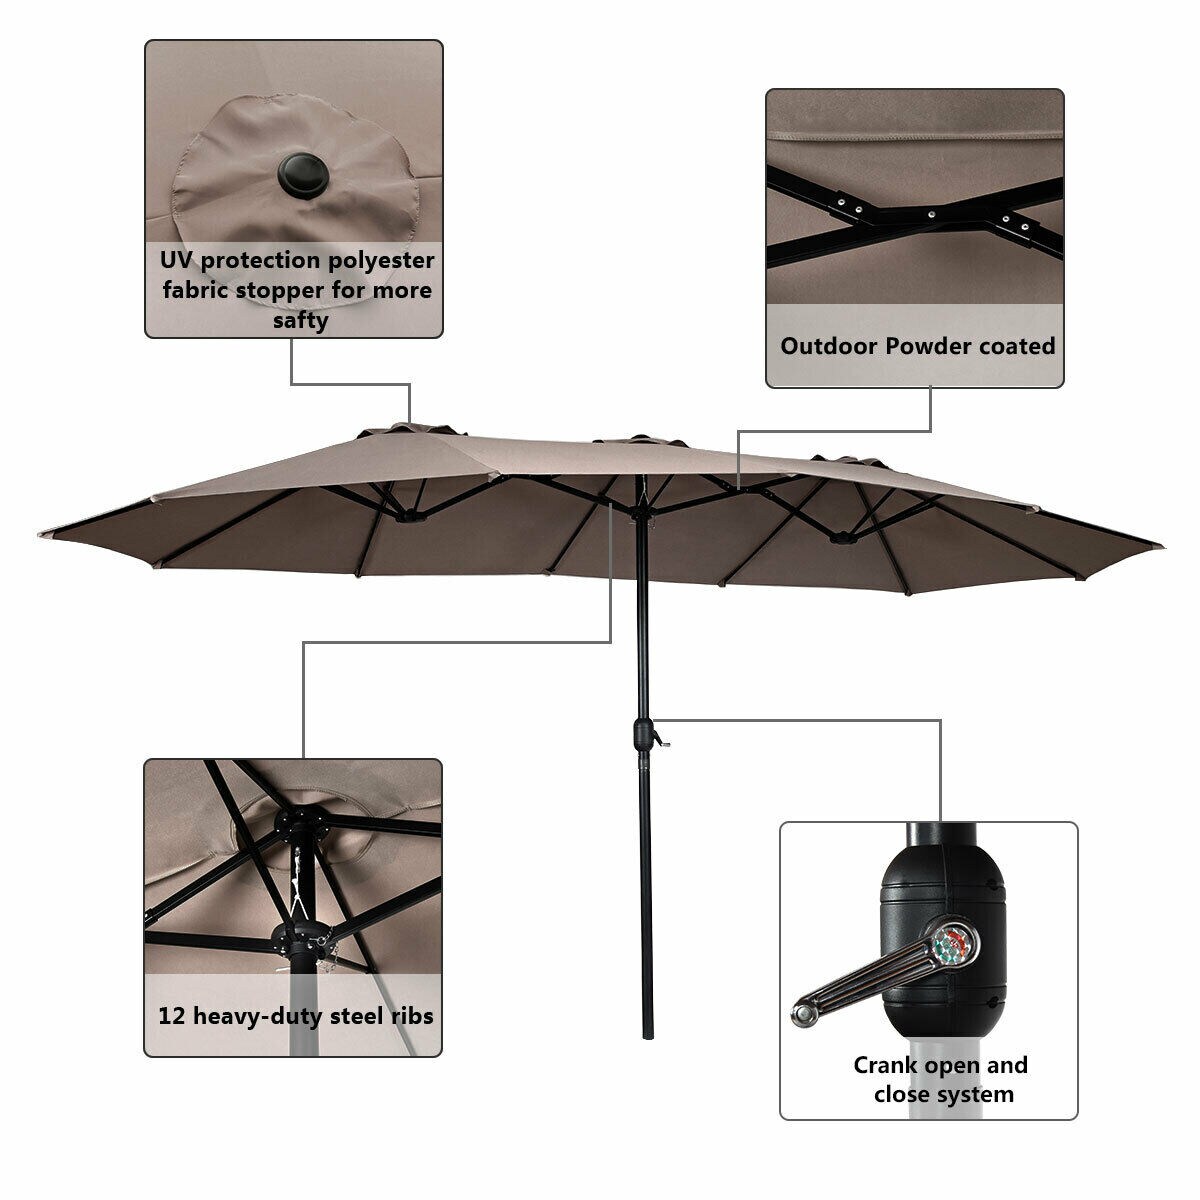 7 FT Diamond Shaped Top Umbrella W/ Tilt Carry Bag 98% UVA Rays Protection NEW 